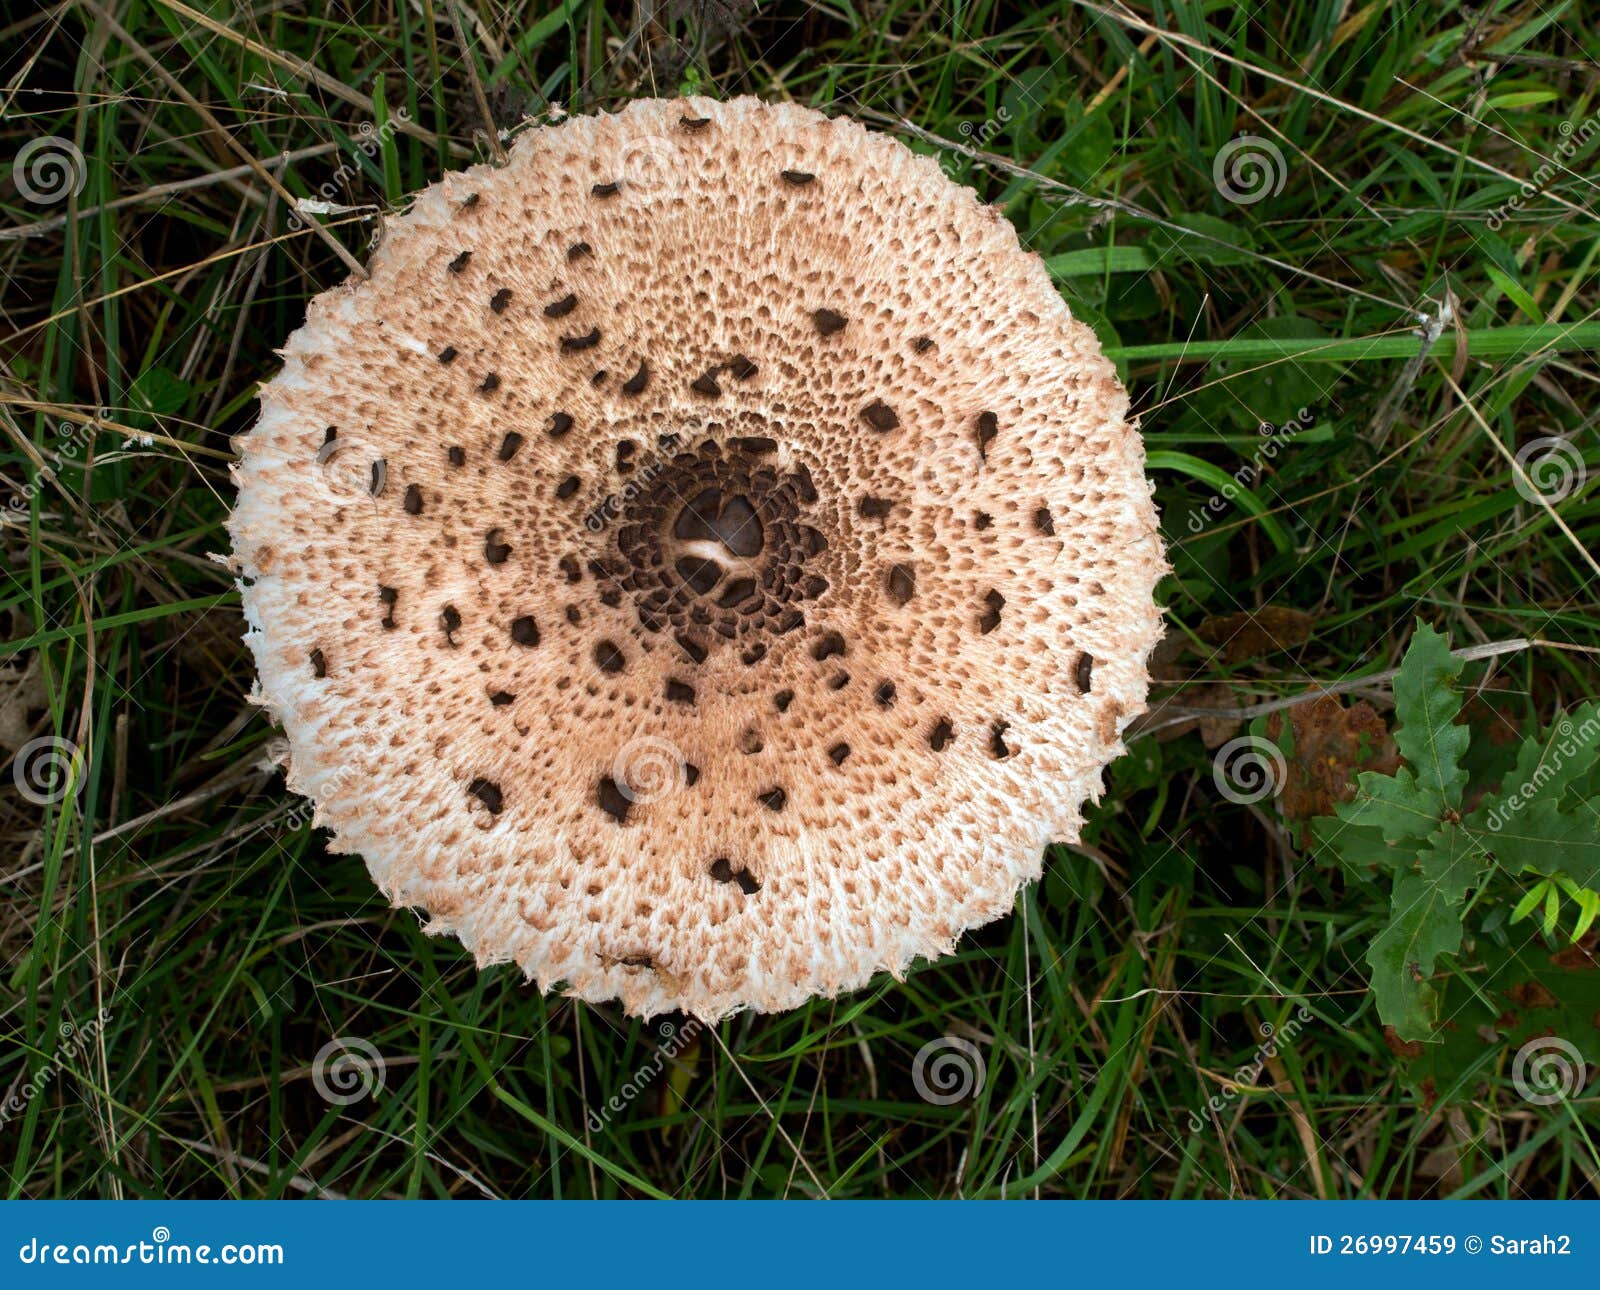 agaricus bohusii - large edible mushroom